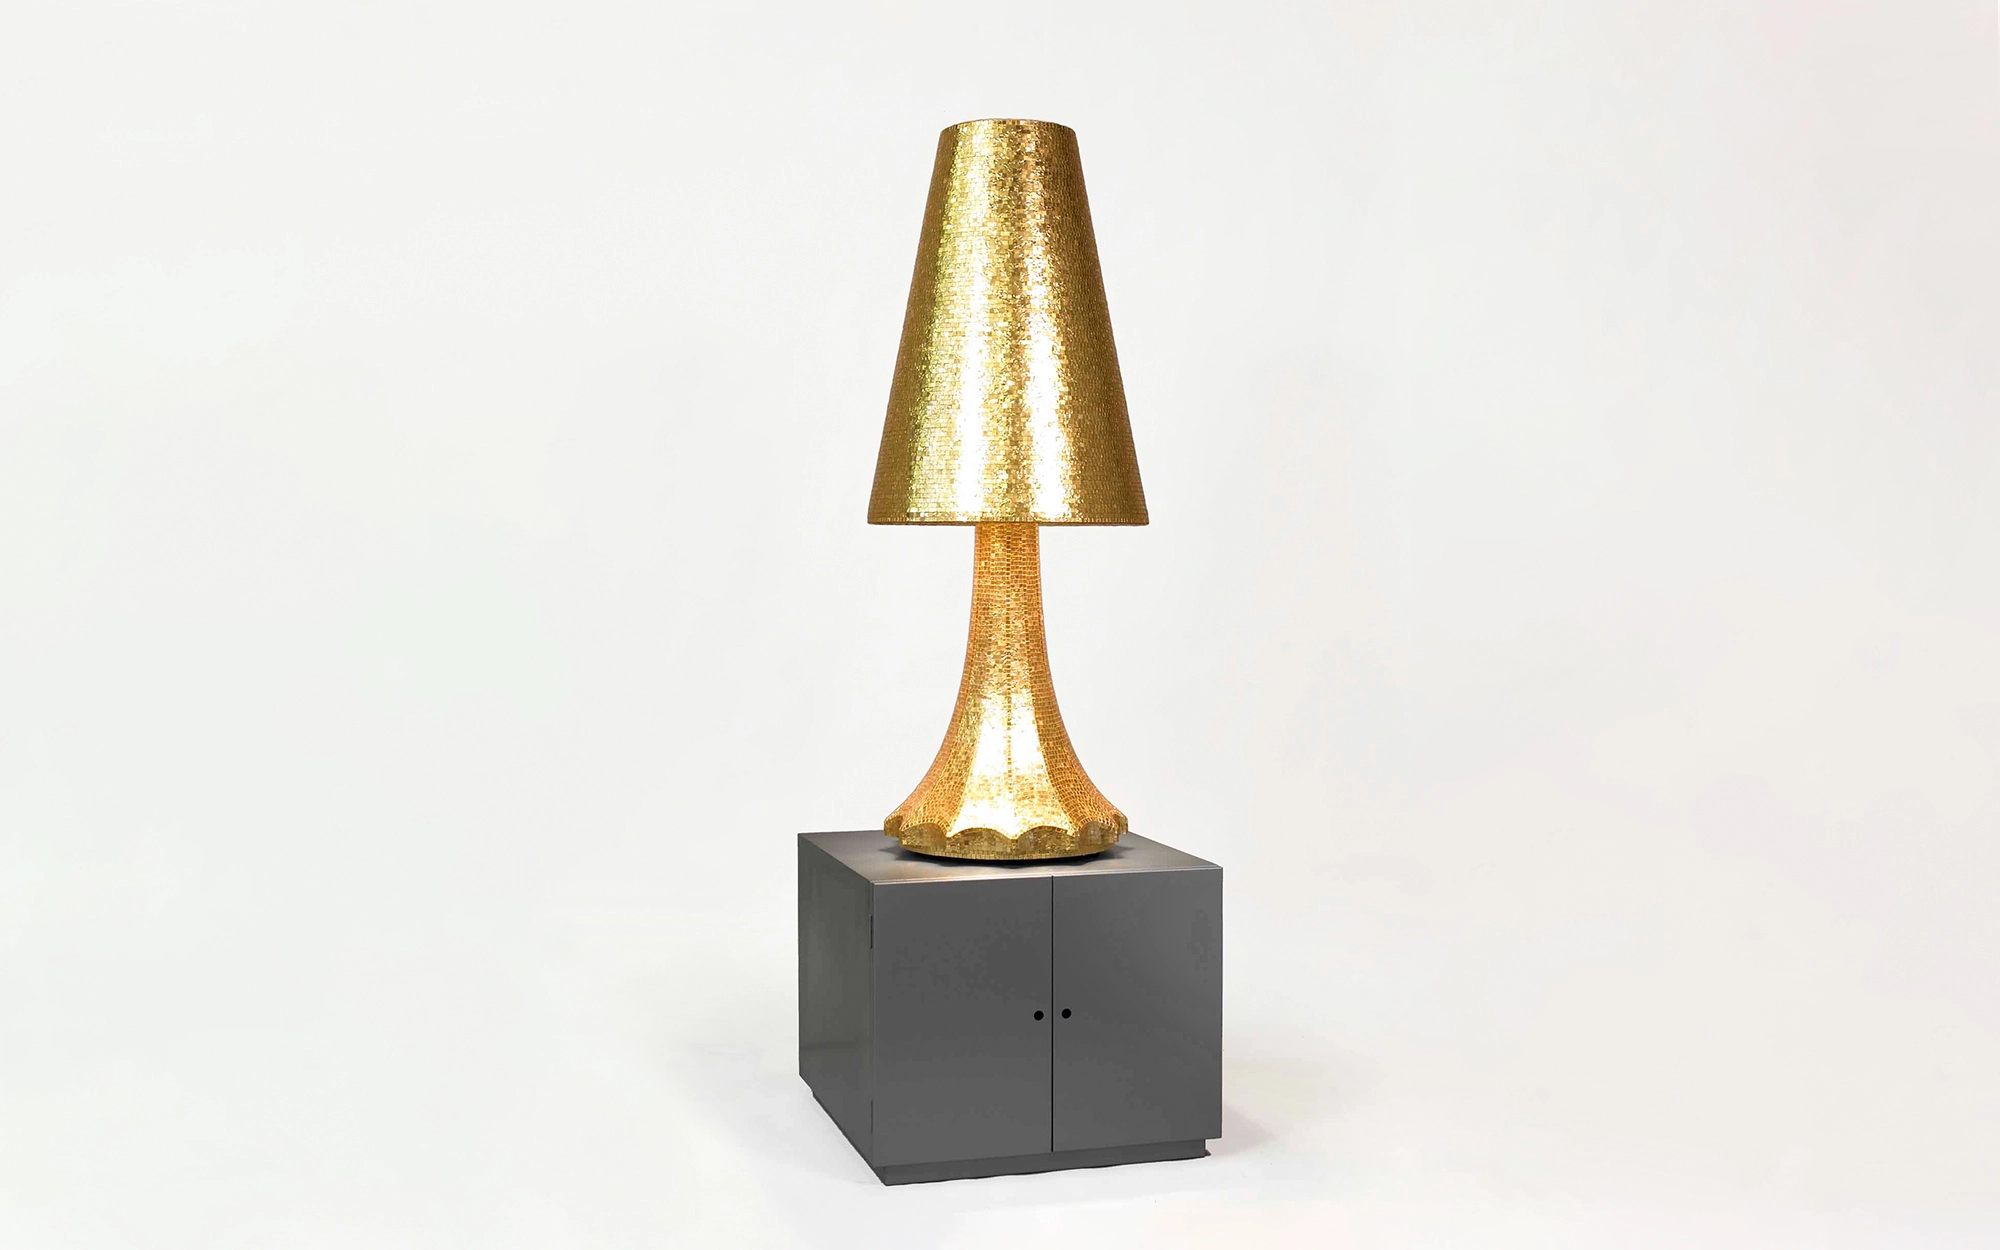 Lampada yellow gold - Alessandro Mendini - floor-light - Galerie kreo